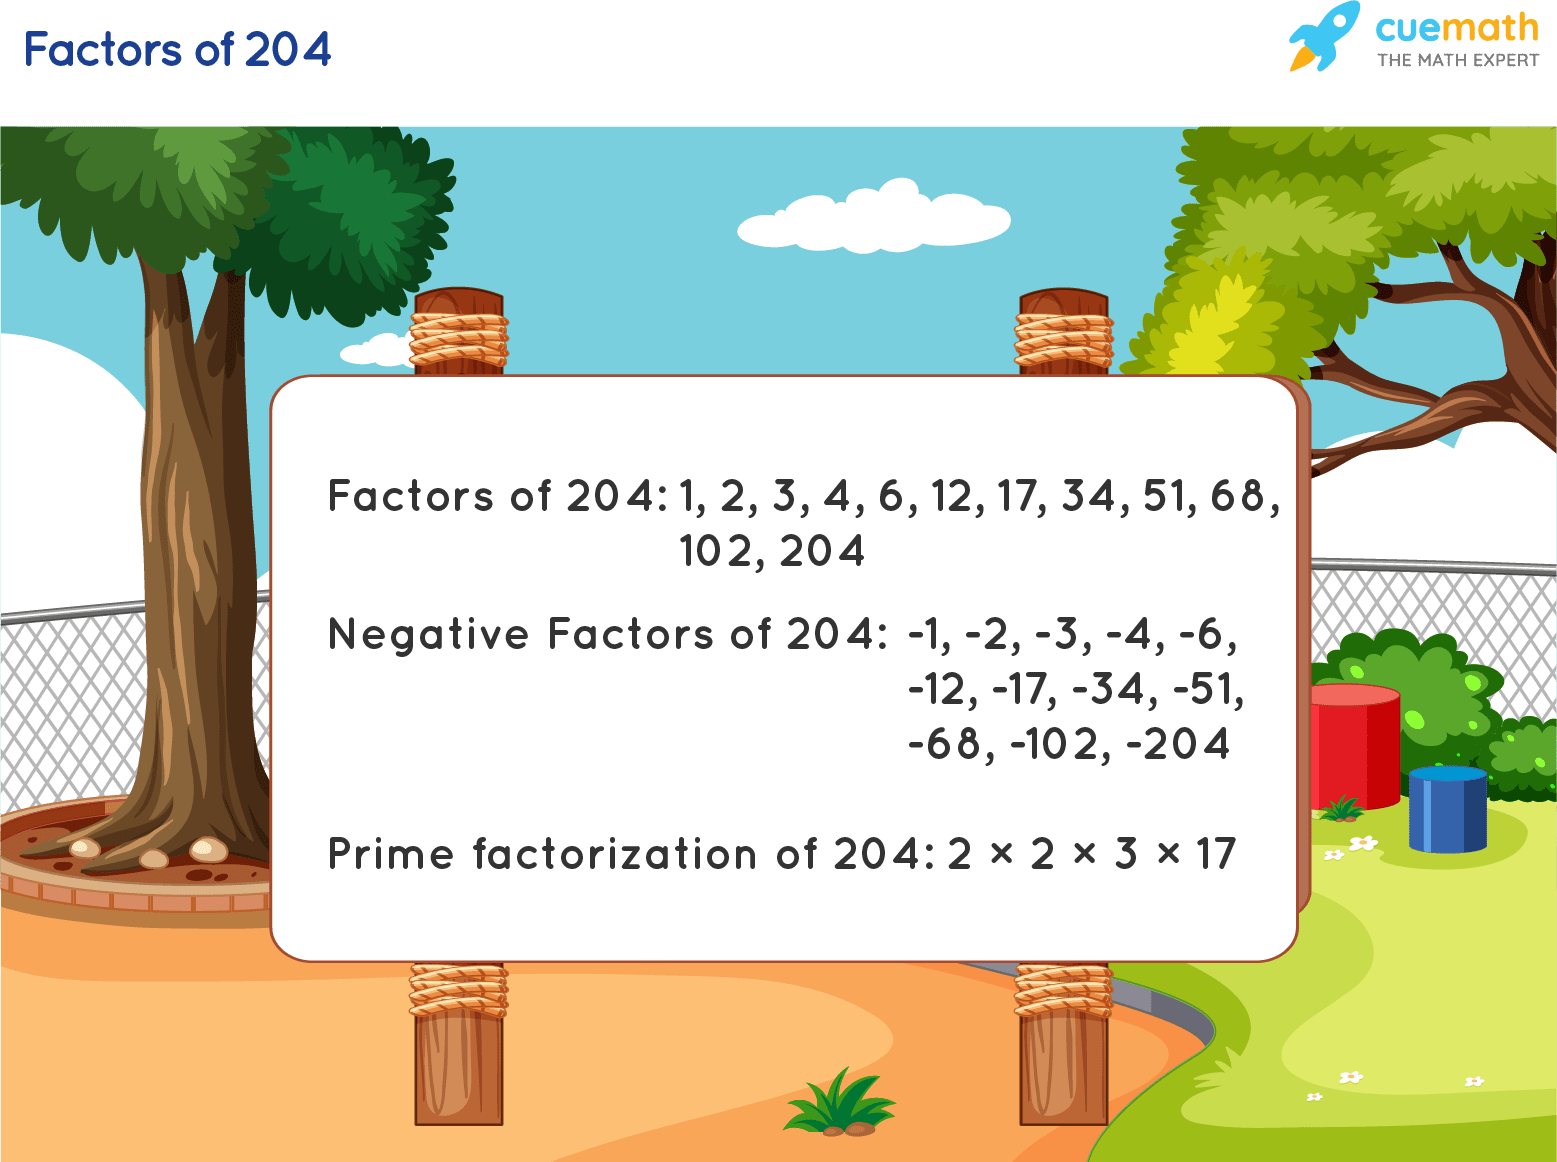 Factors of 204 - Find Prime Factorization/Factors of 204